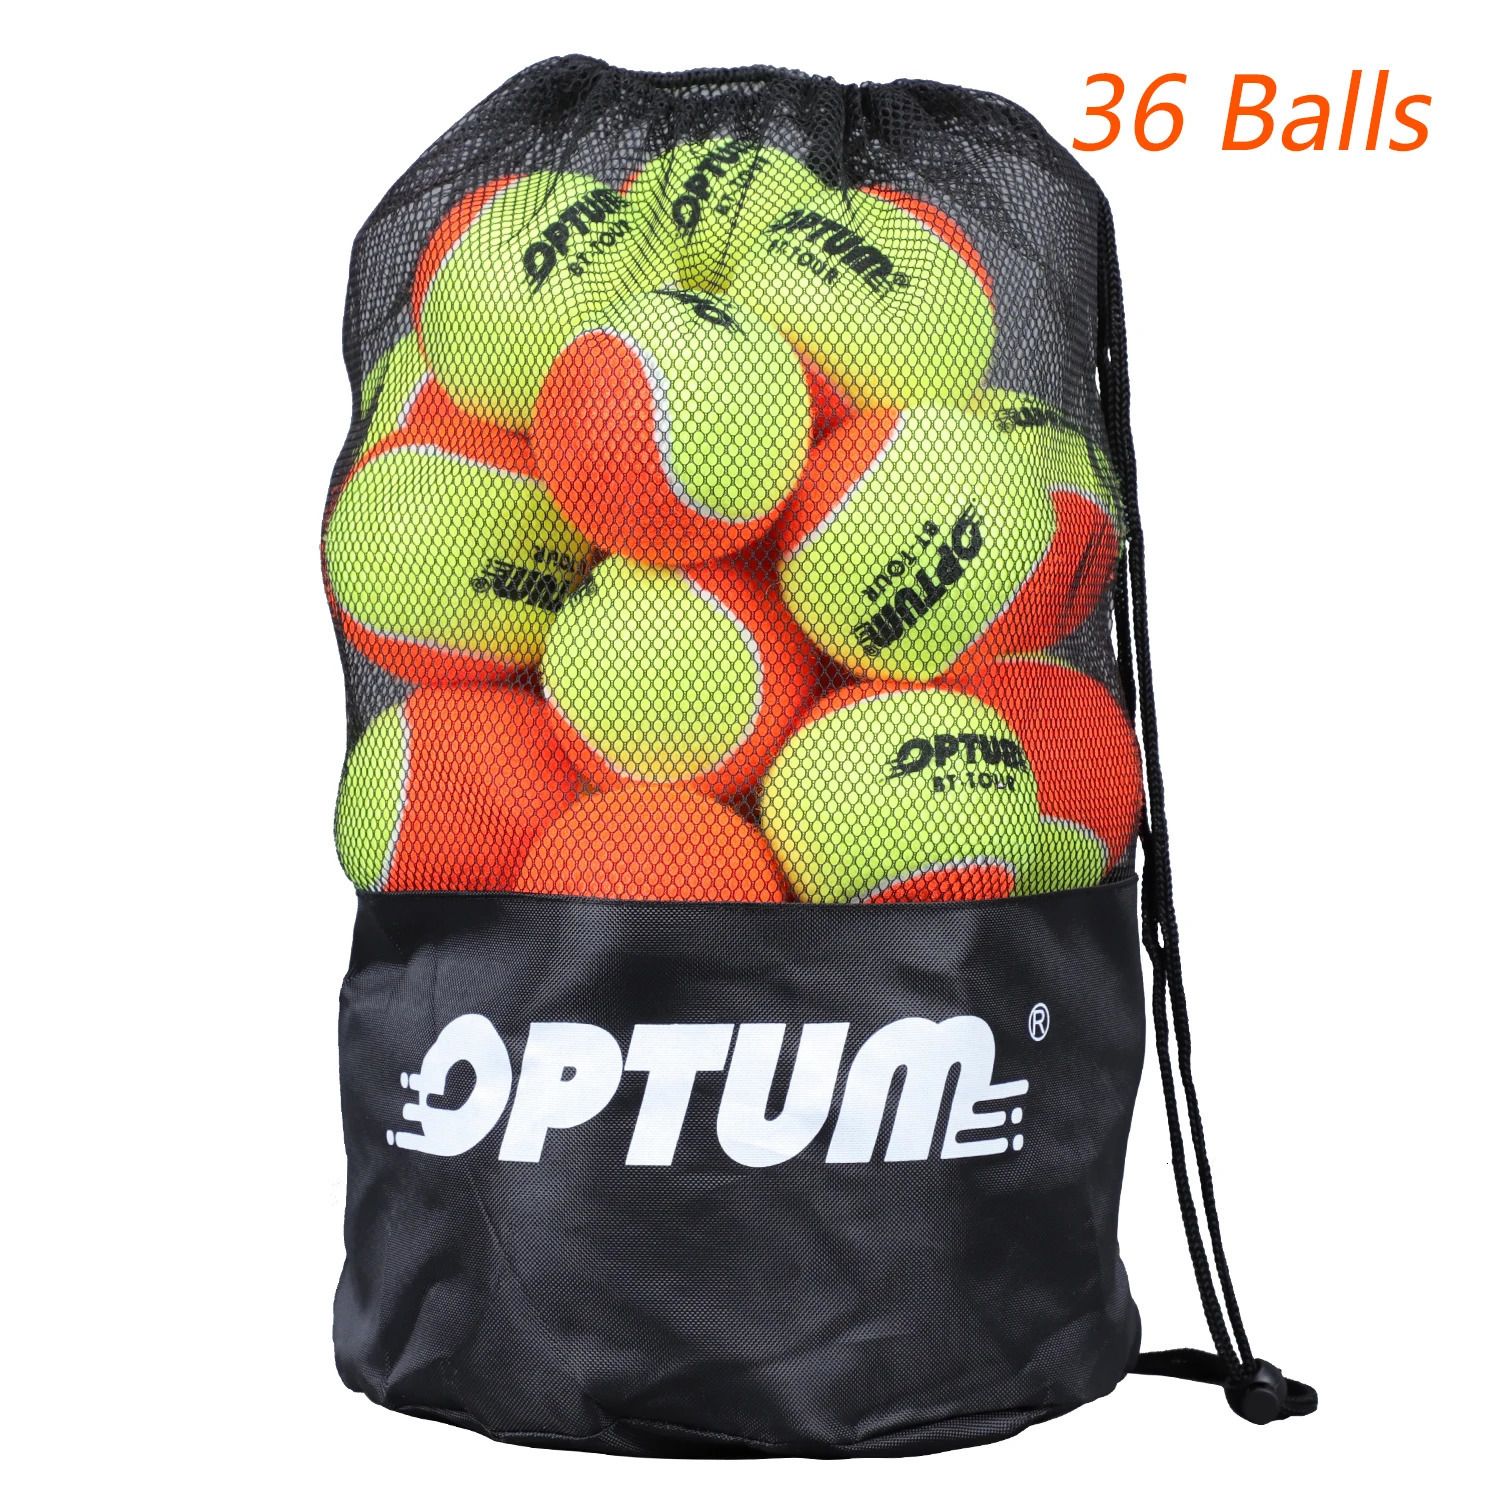 36 Balls